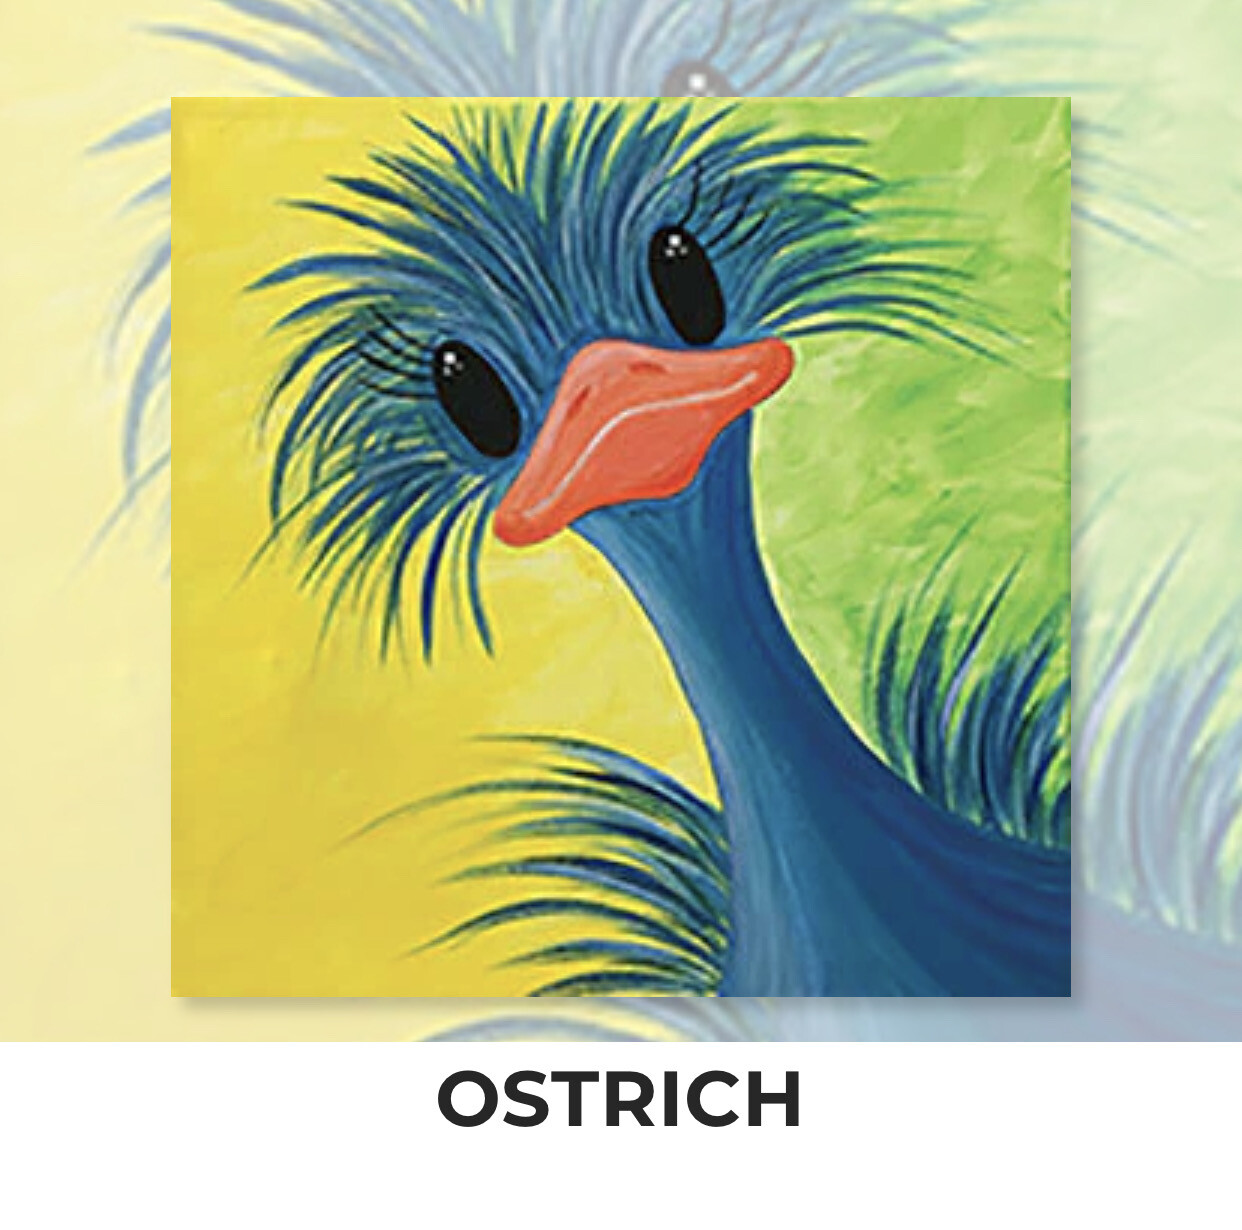 KIDS Acrylic Paint On Canvas DIY Art Kit - Ostrich